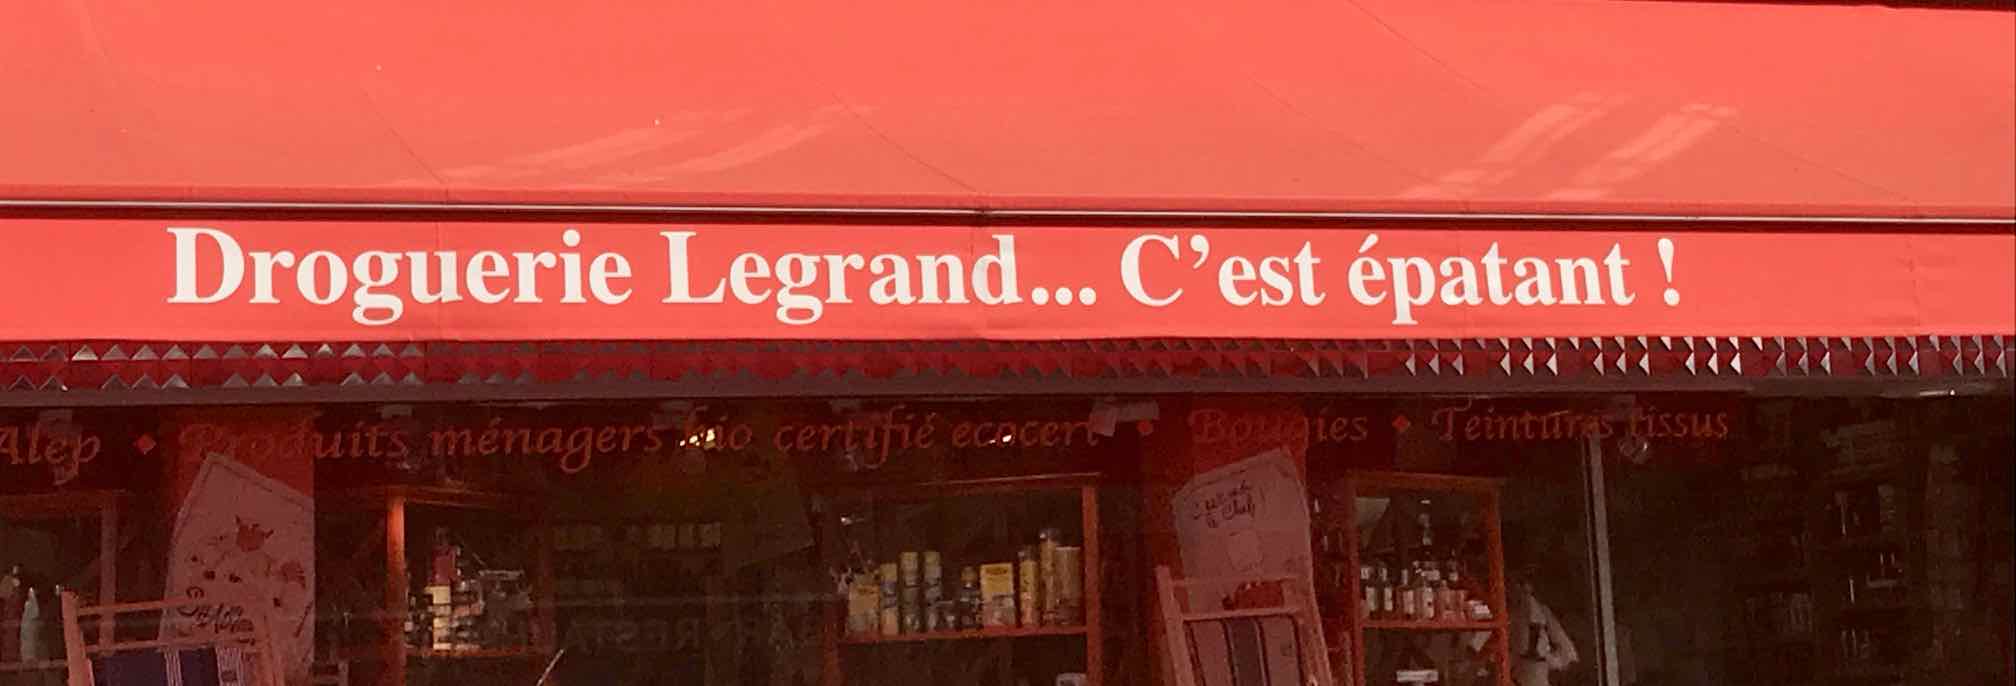 Droguerie Legrand store front